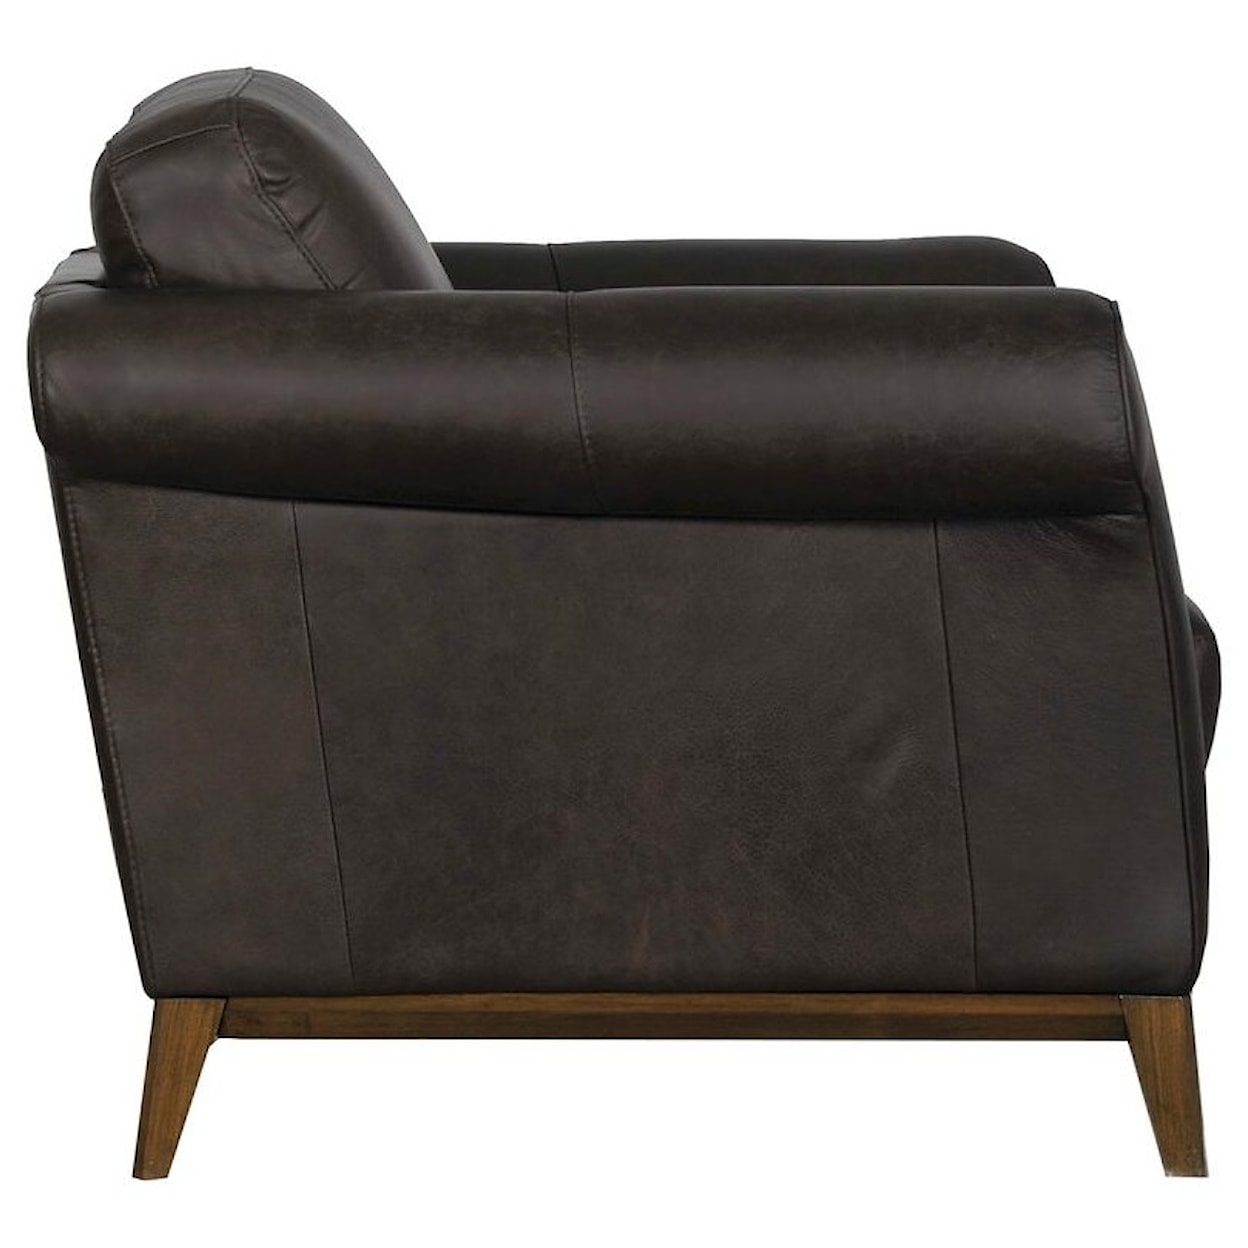 Natuzzi Editions 100% Italian Leather Chair